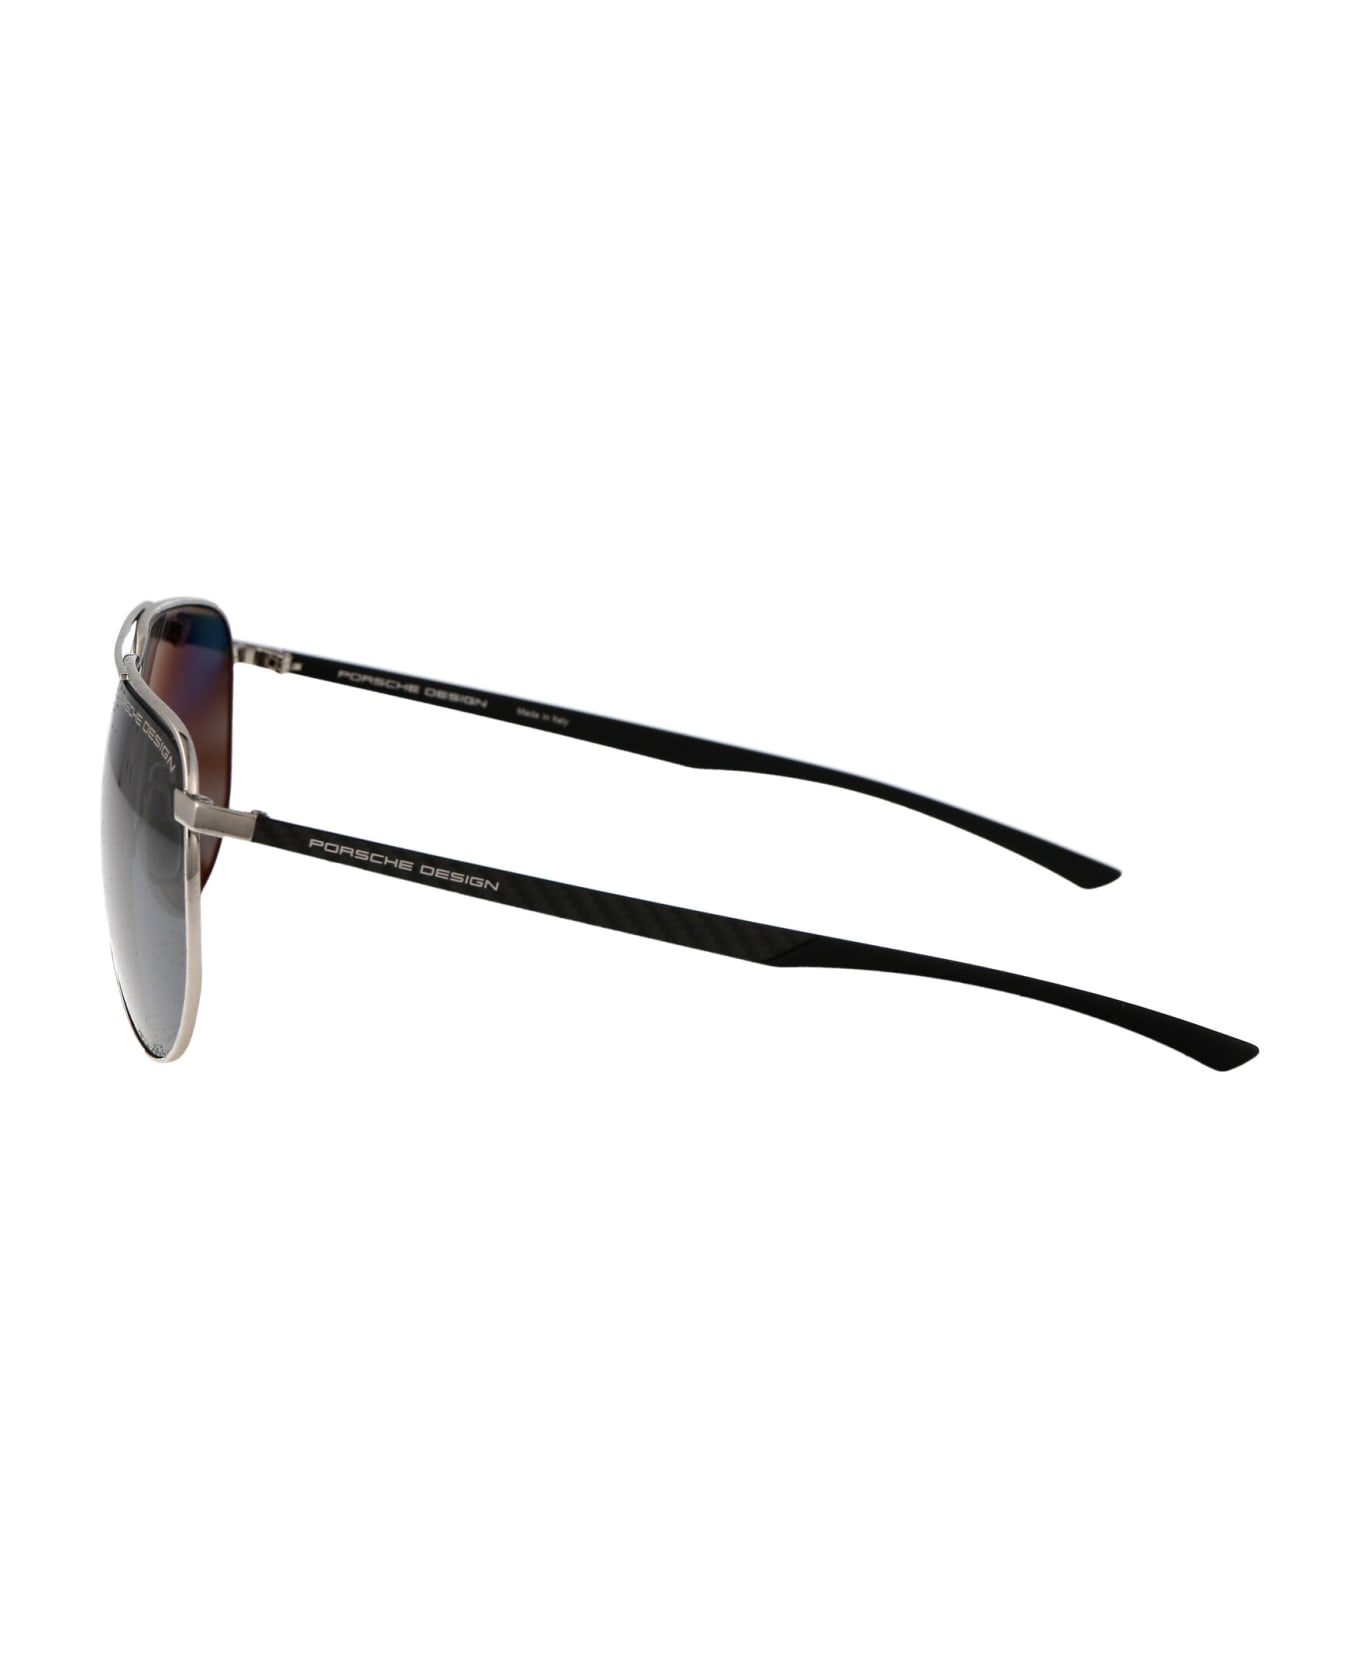 Porsche Design P8962 Sunglasses - B416 PALLADIUM BLACK サングラス